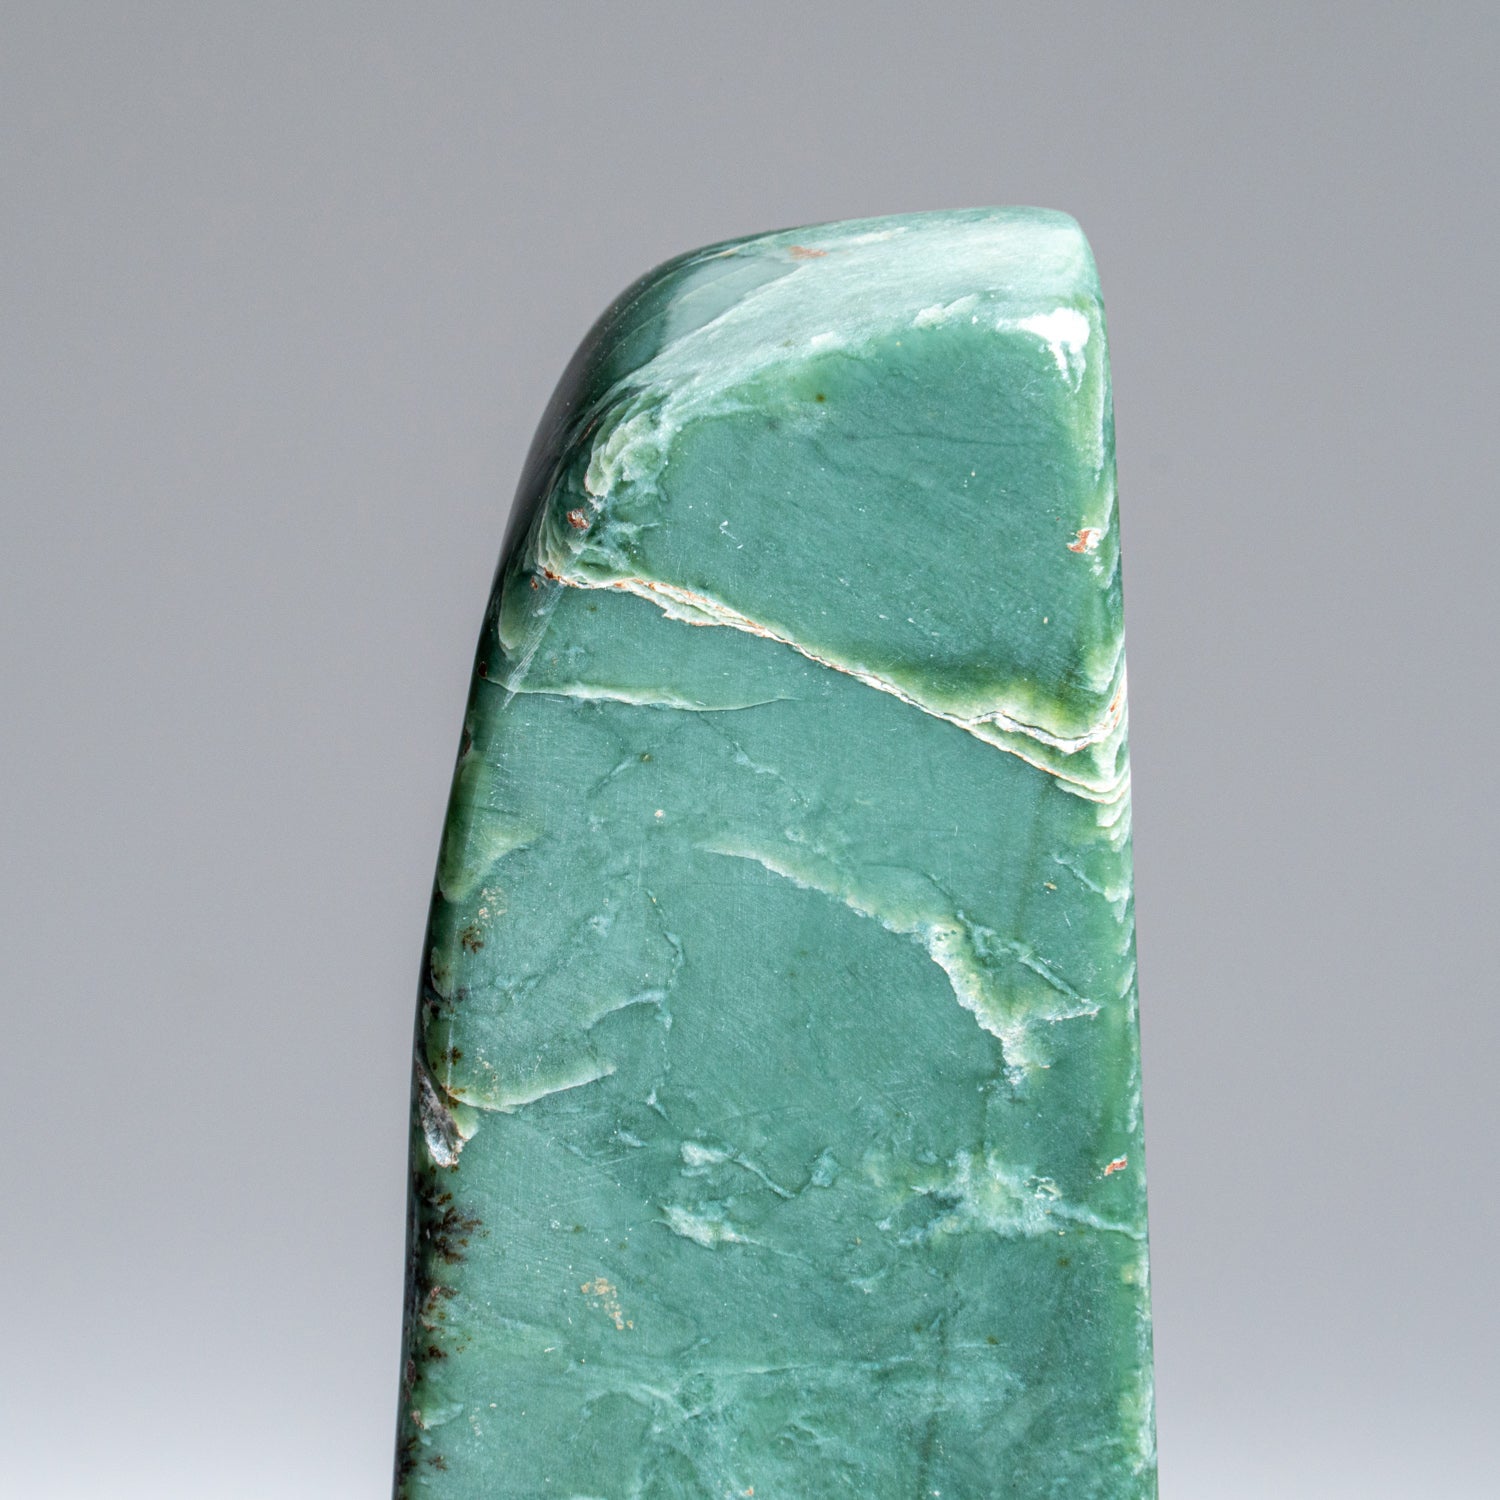 Polished Nephrite Jade Freeform from Pakistan (243.7 grams)